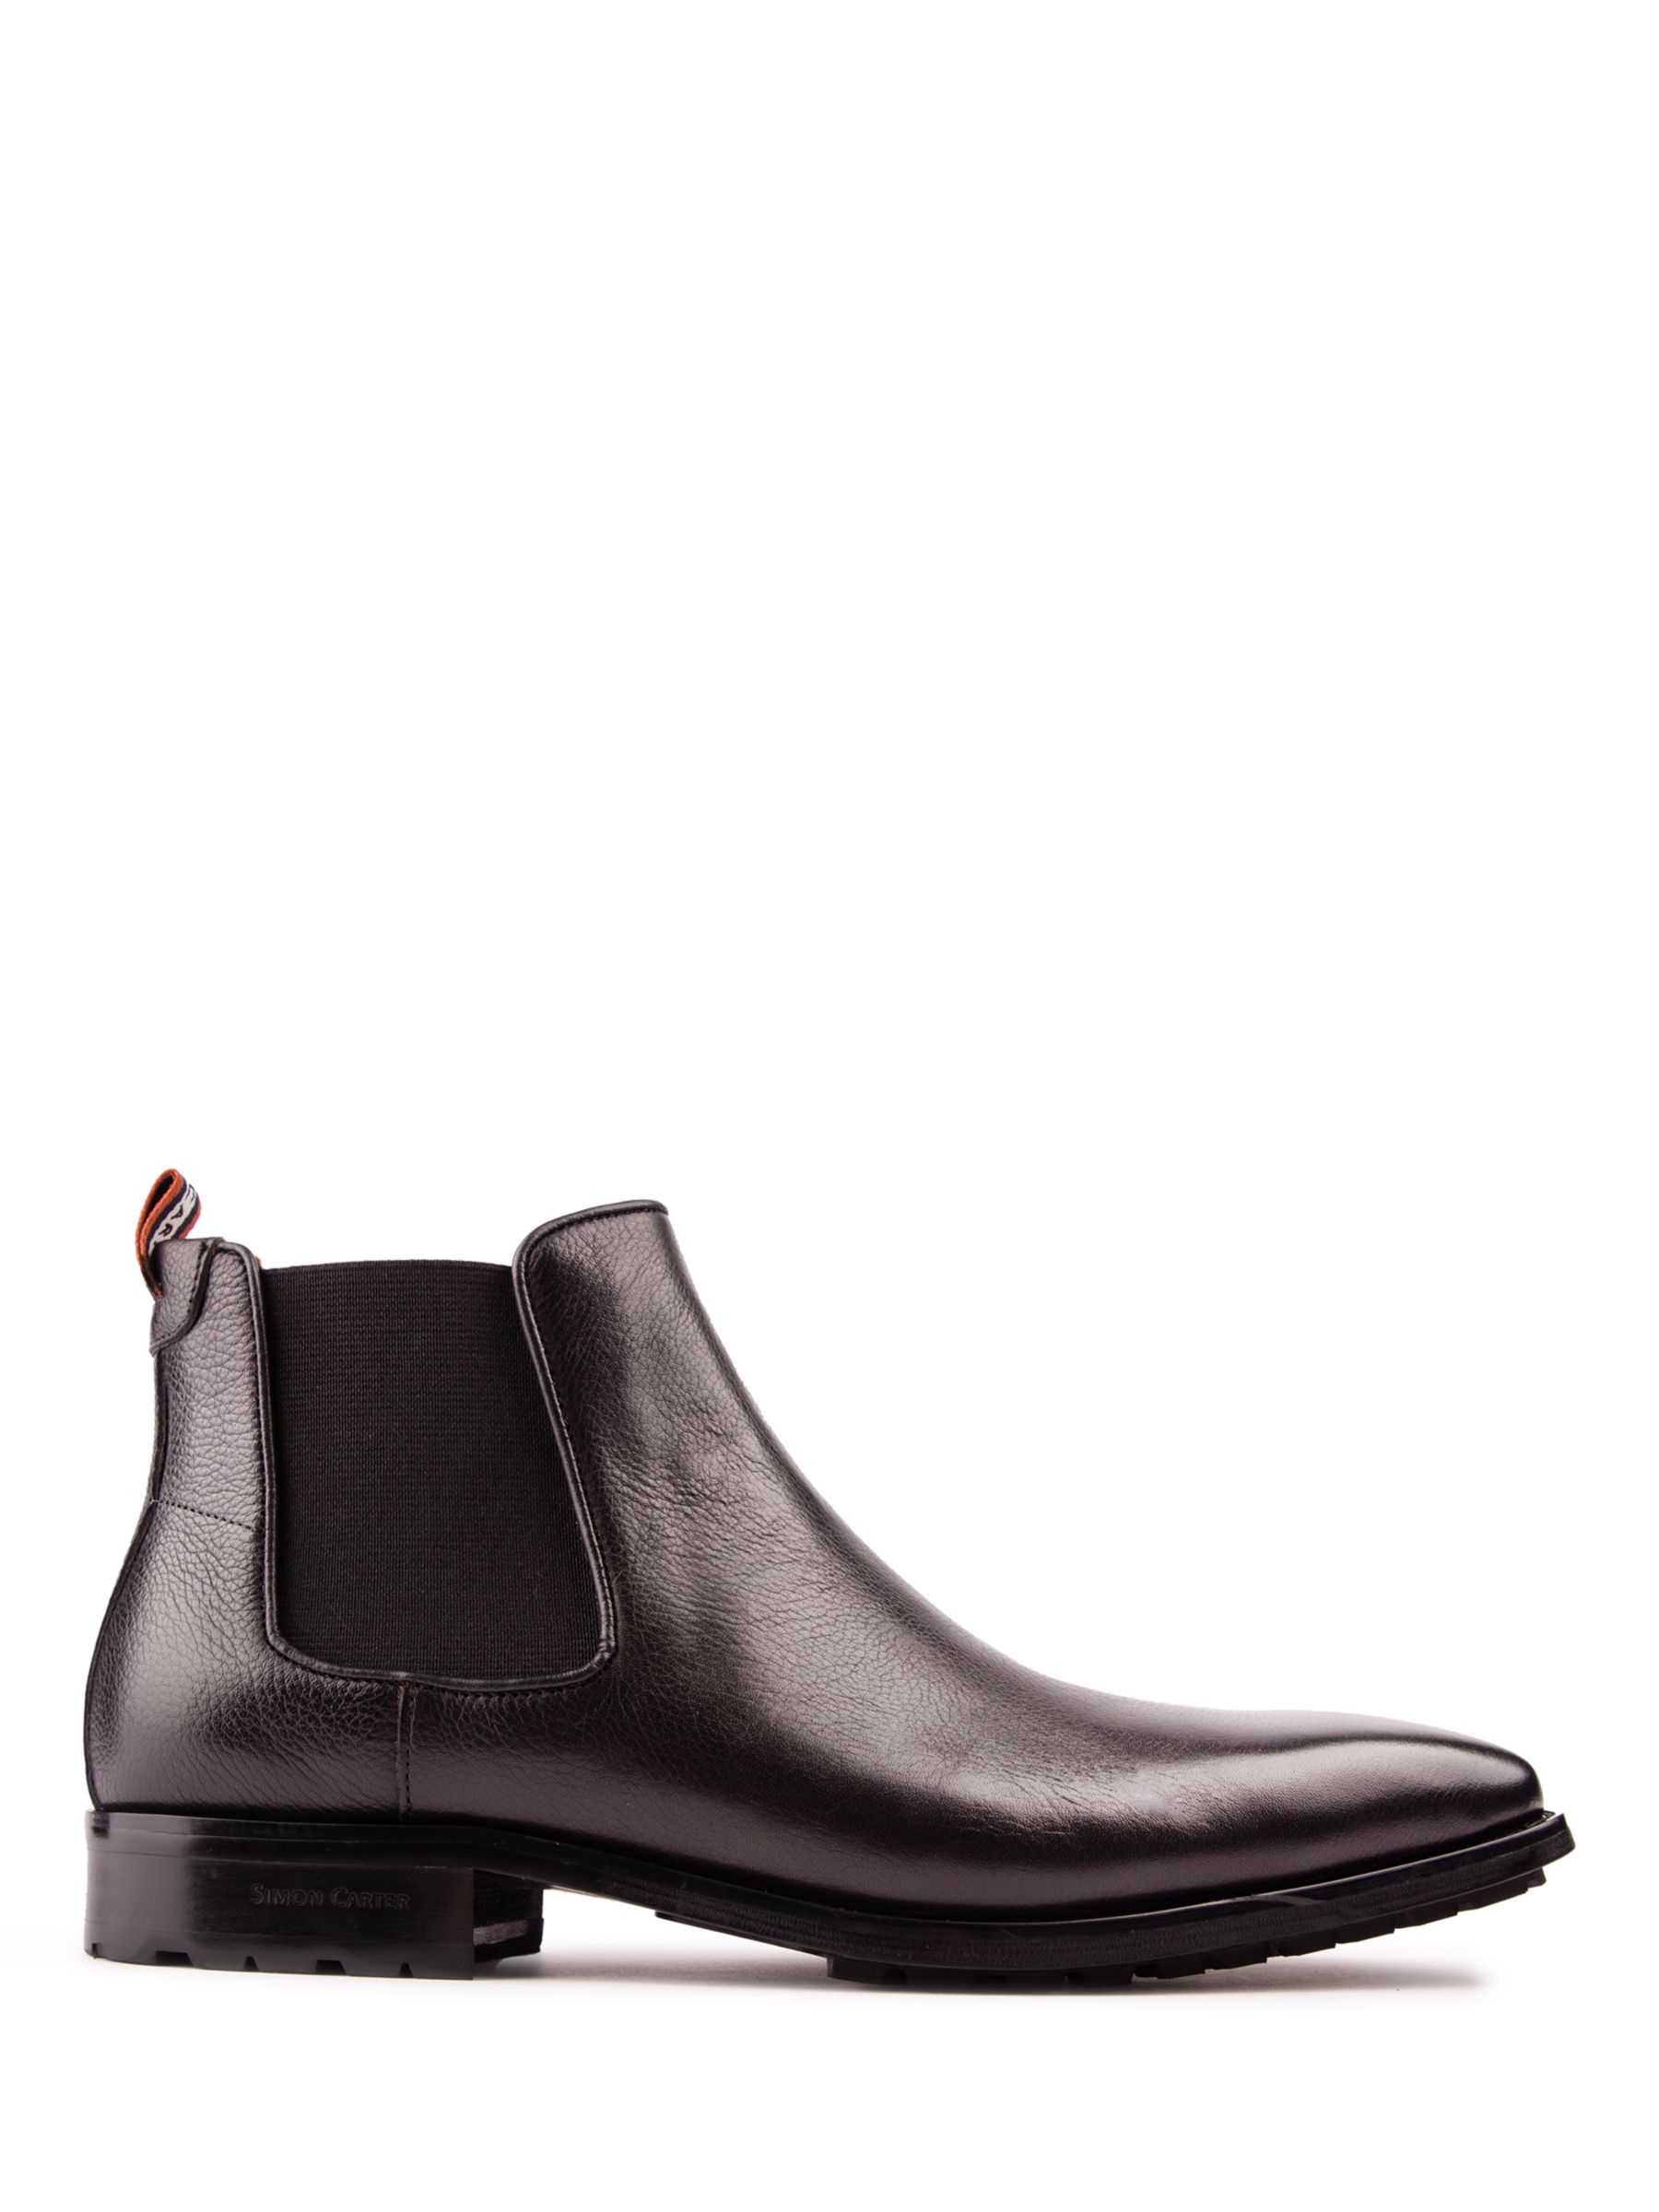 Simon Carter Clover Leather Chelsea Boots, Black at John Lewis & Partners